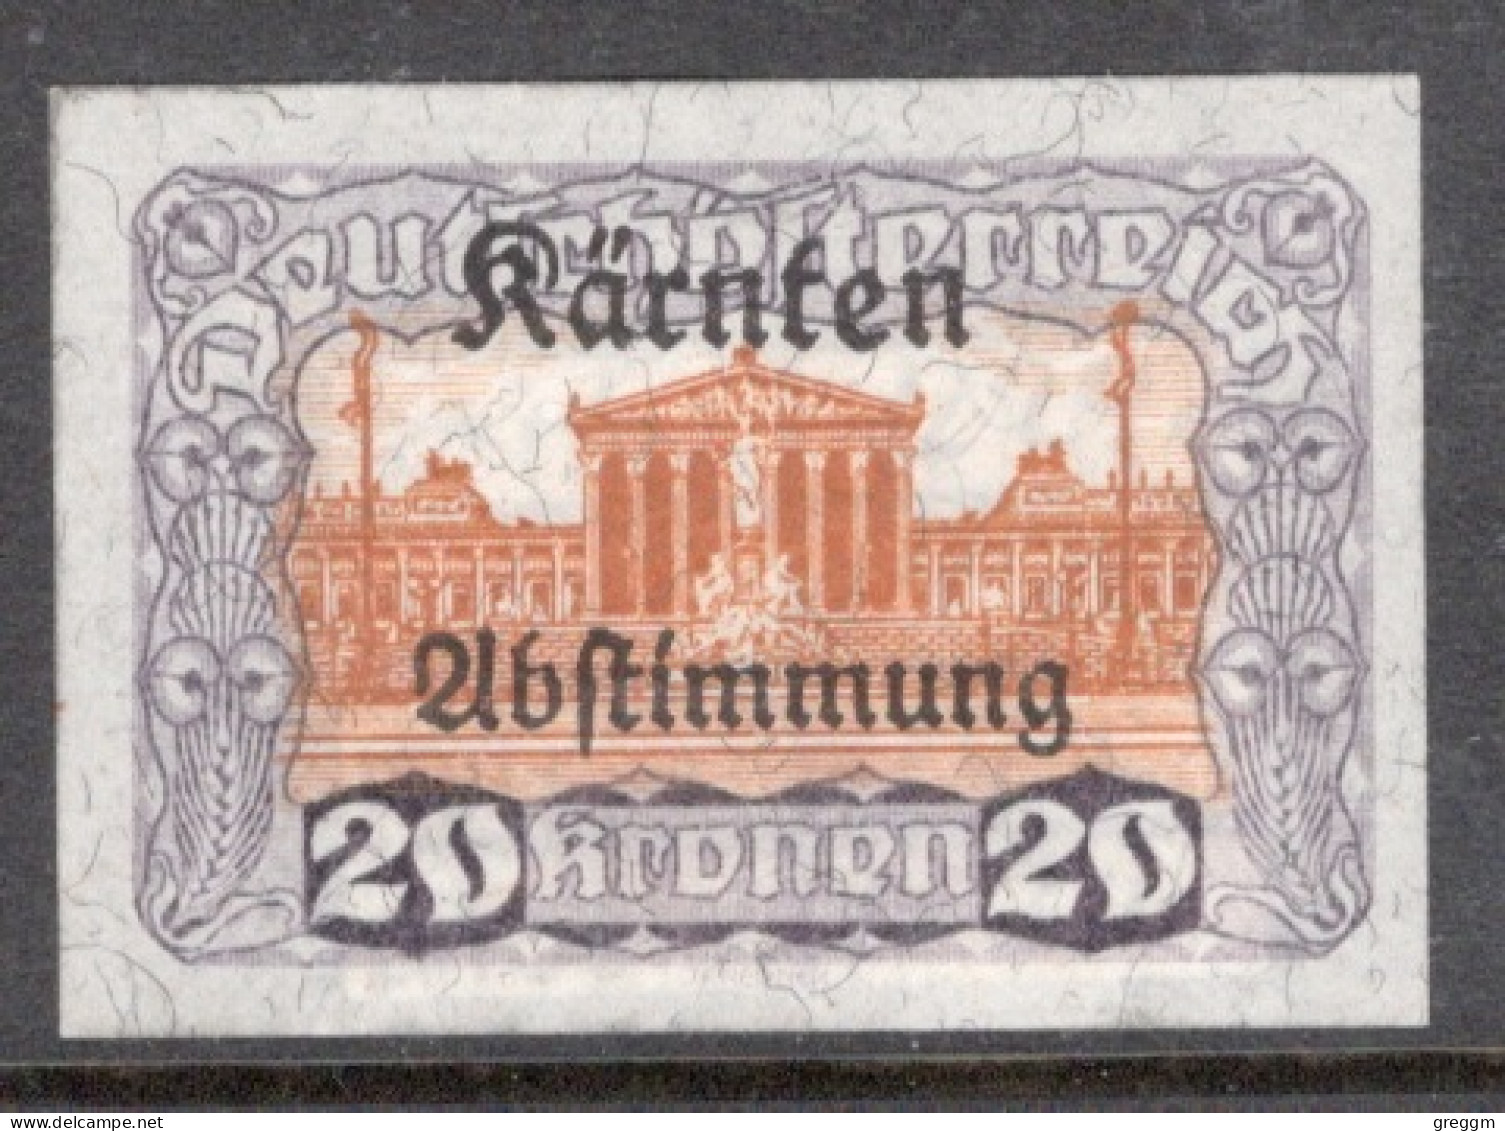 Austria 1920 Single Stamp Showing Overprinted "Kärnten Abstimmung" - Referendum In Carinthia In Unmounted Mint - Nuovi